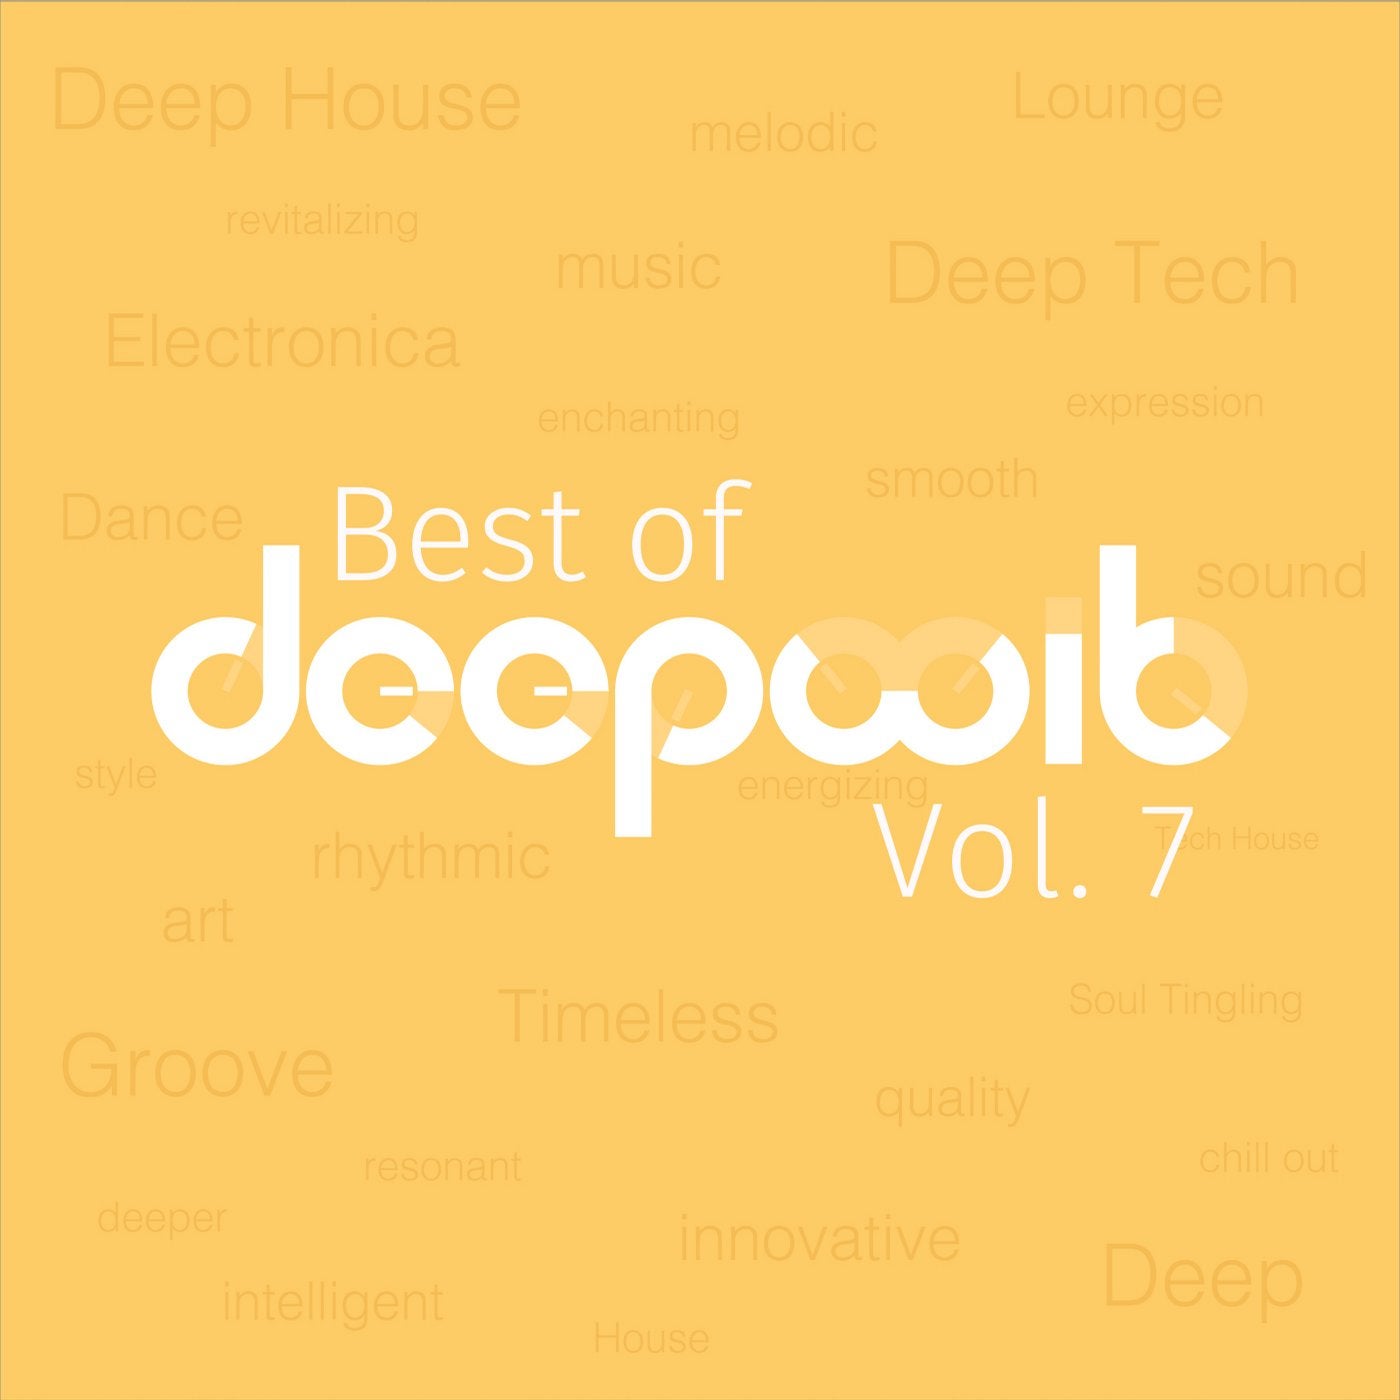 Best of DeepWit, Vol. 7